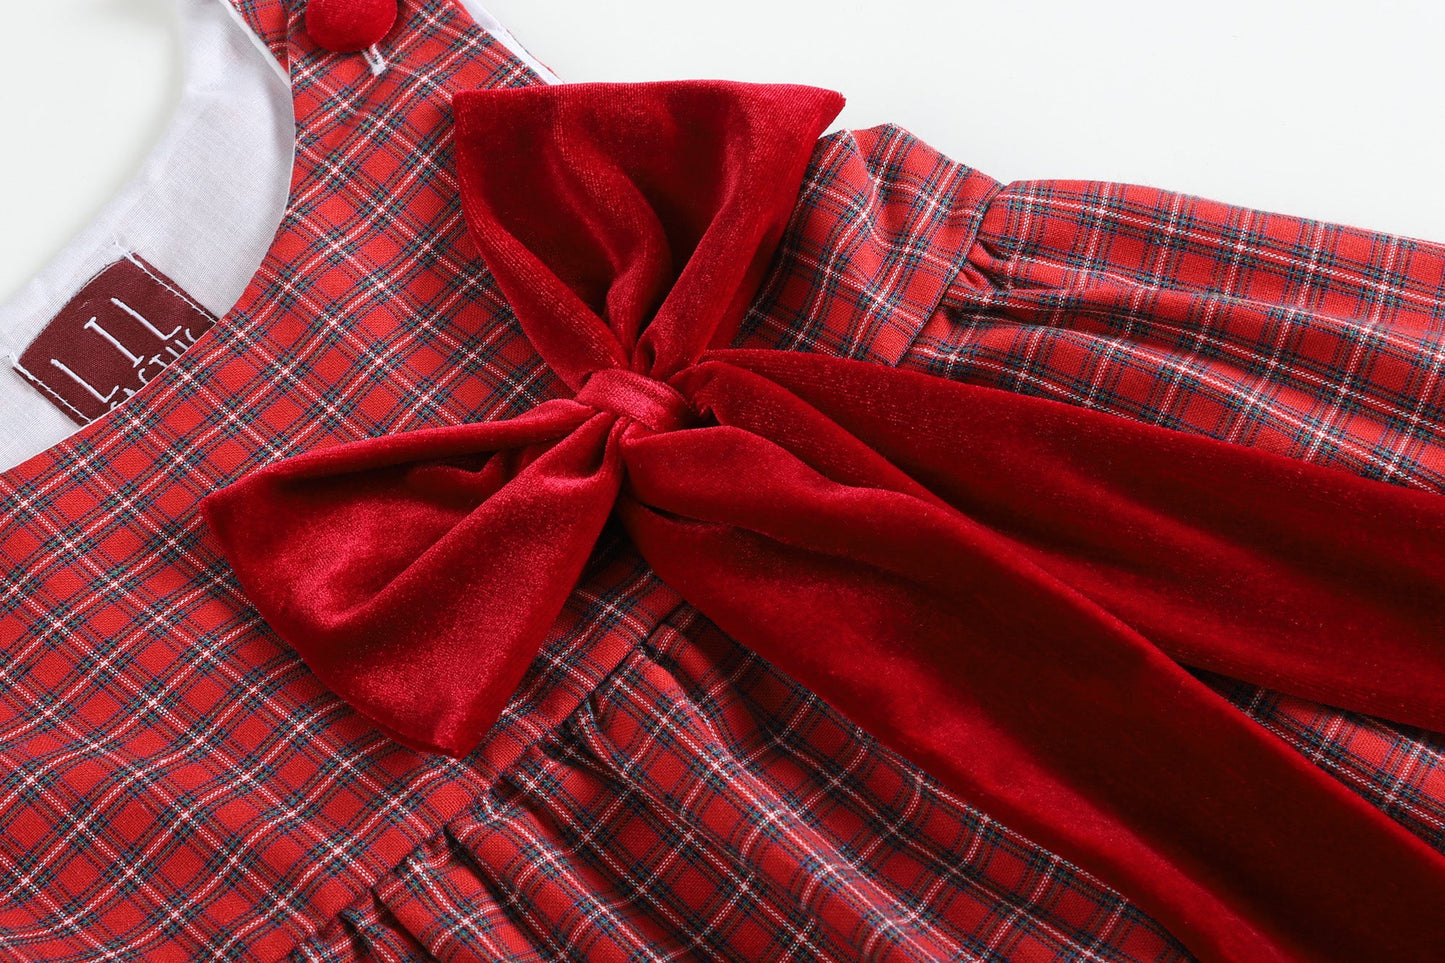 Red Plaid Santa Bow Sleeveless Babydoll Dress